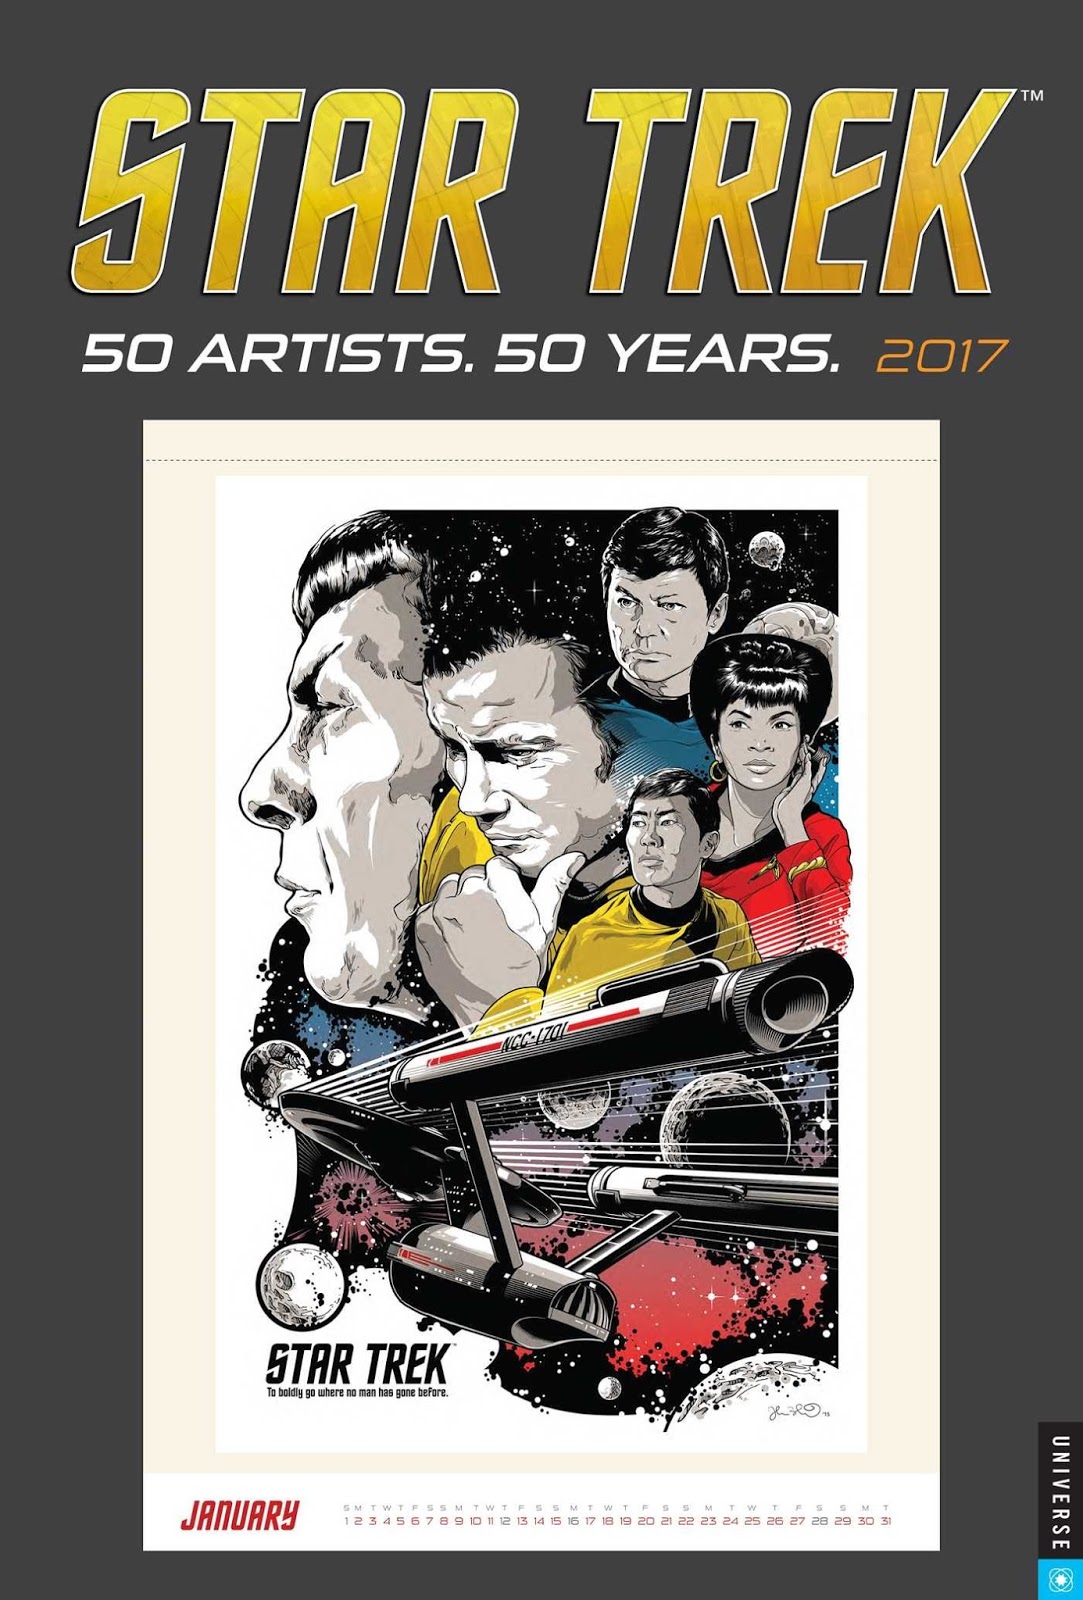 Universe+Publishing+Star+Trek+2017+Poster+Calendar+50+Artists.+50+Years